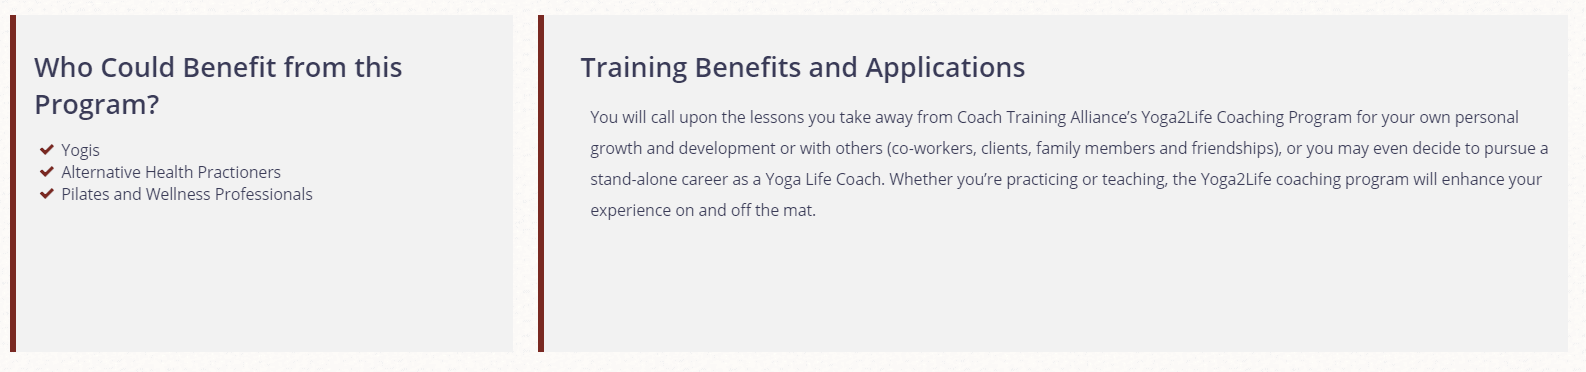 Coach Training Alliance Benefits